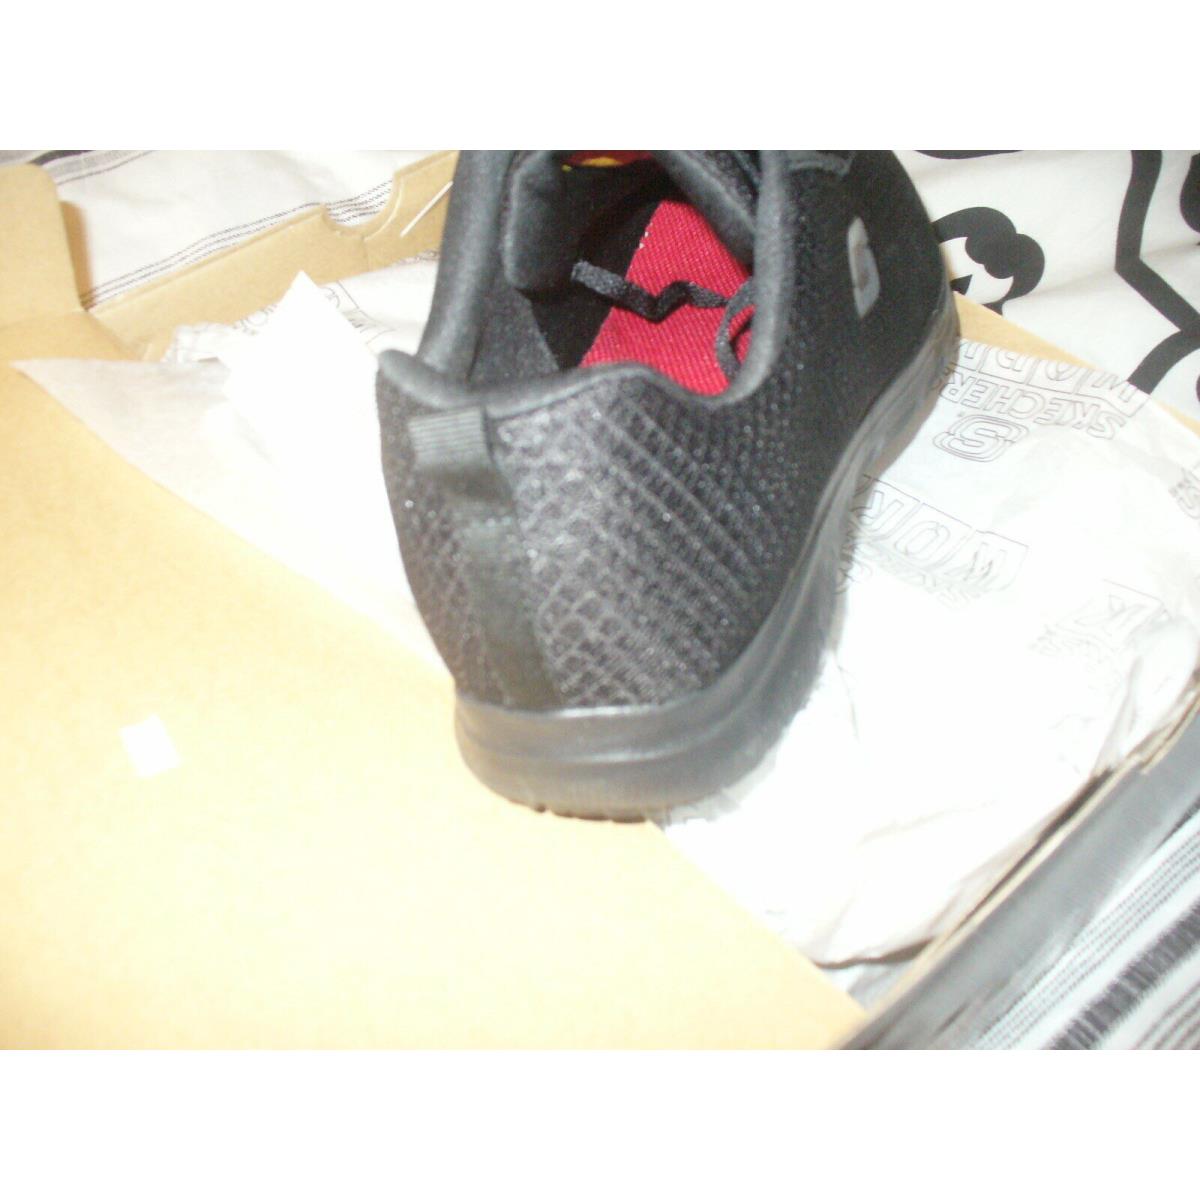 Skechers shoes  - Black 8